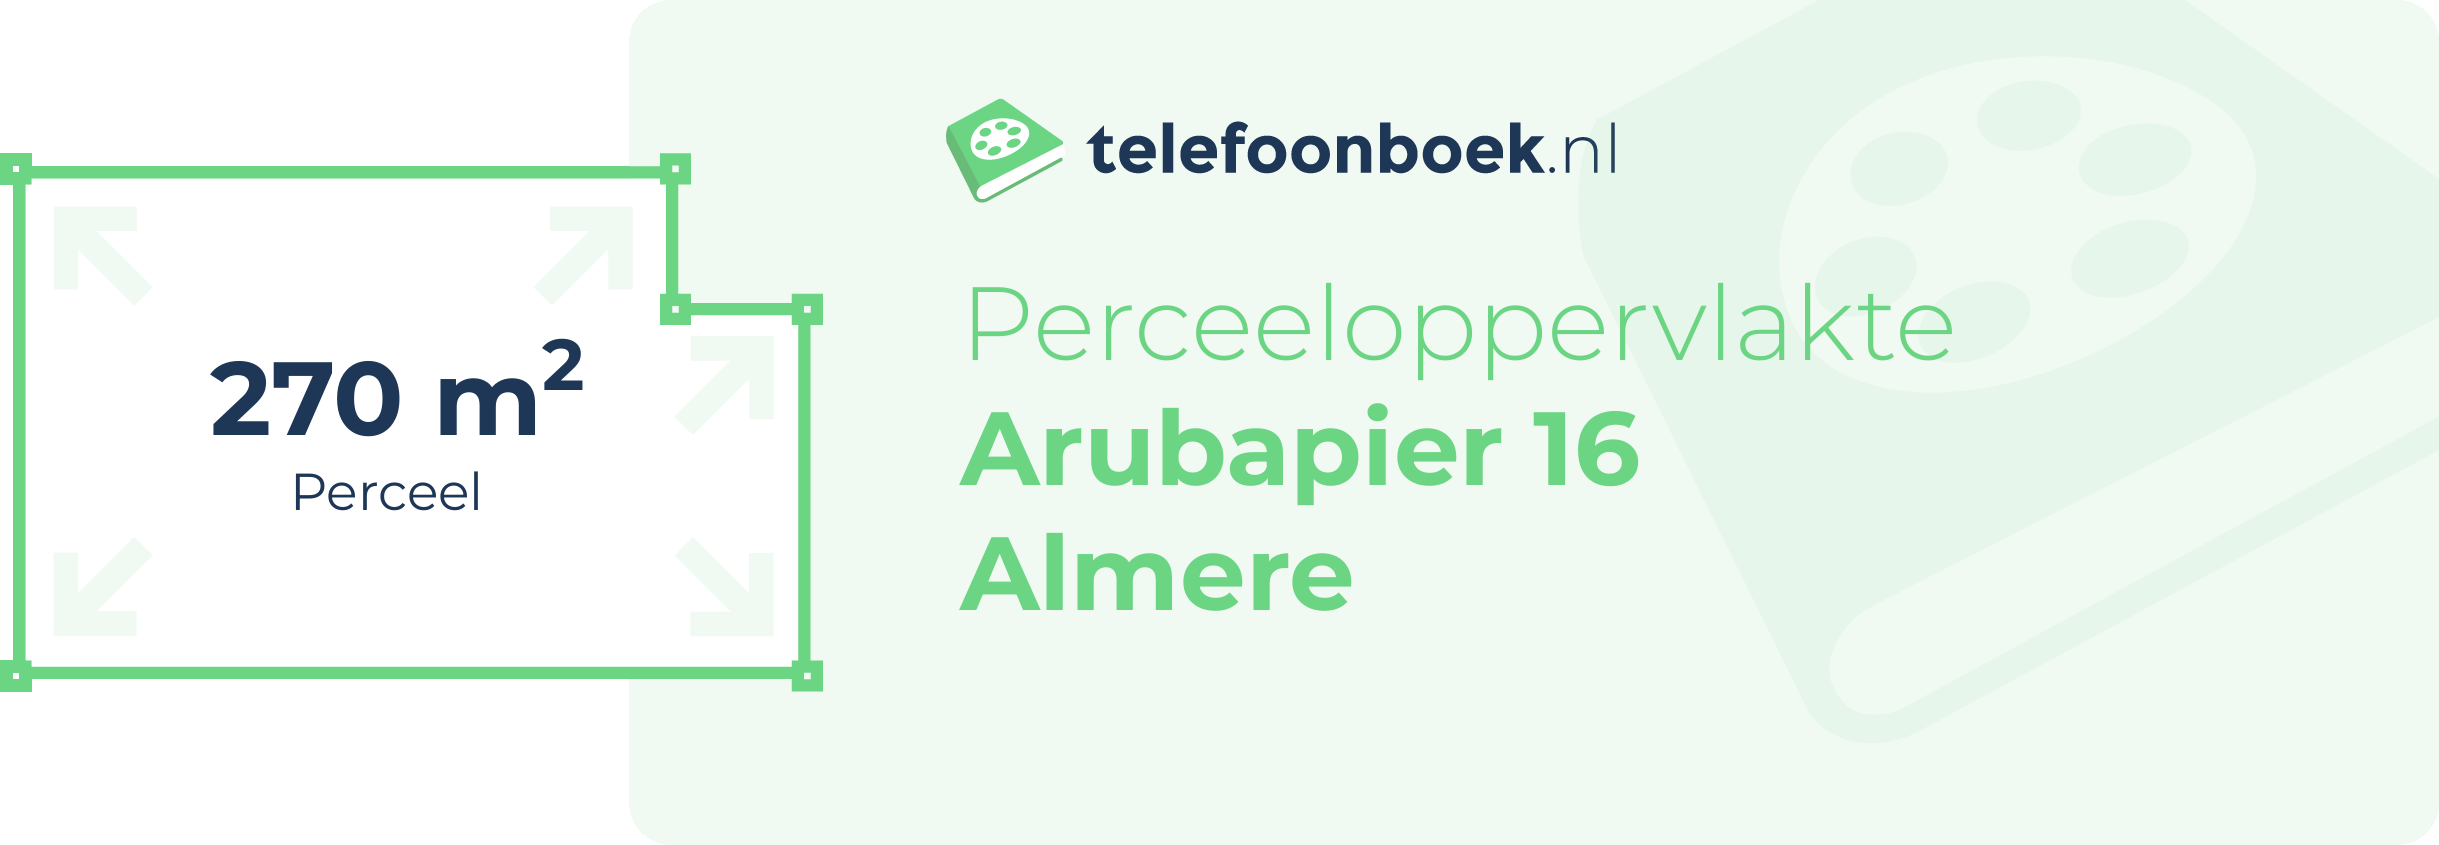 Perceeloppervlakte Arubapier 16 Almere